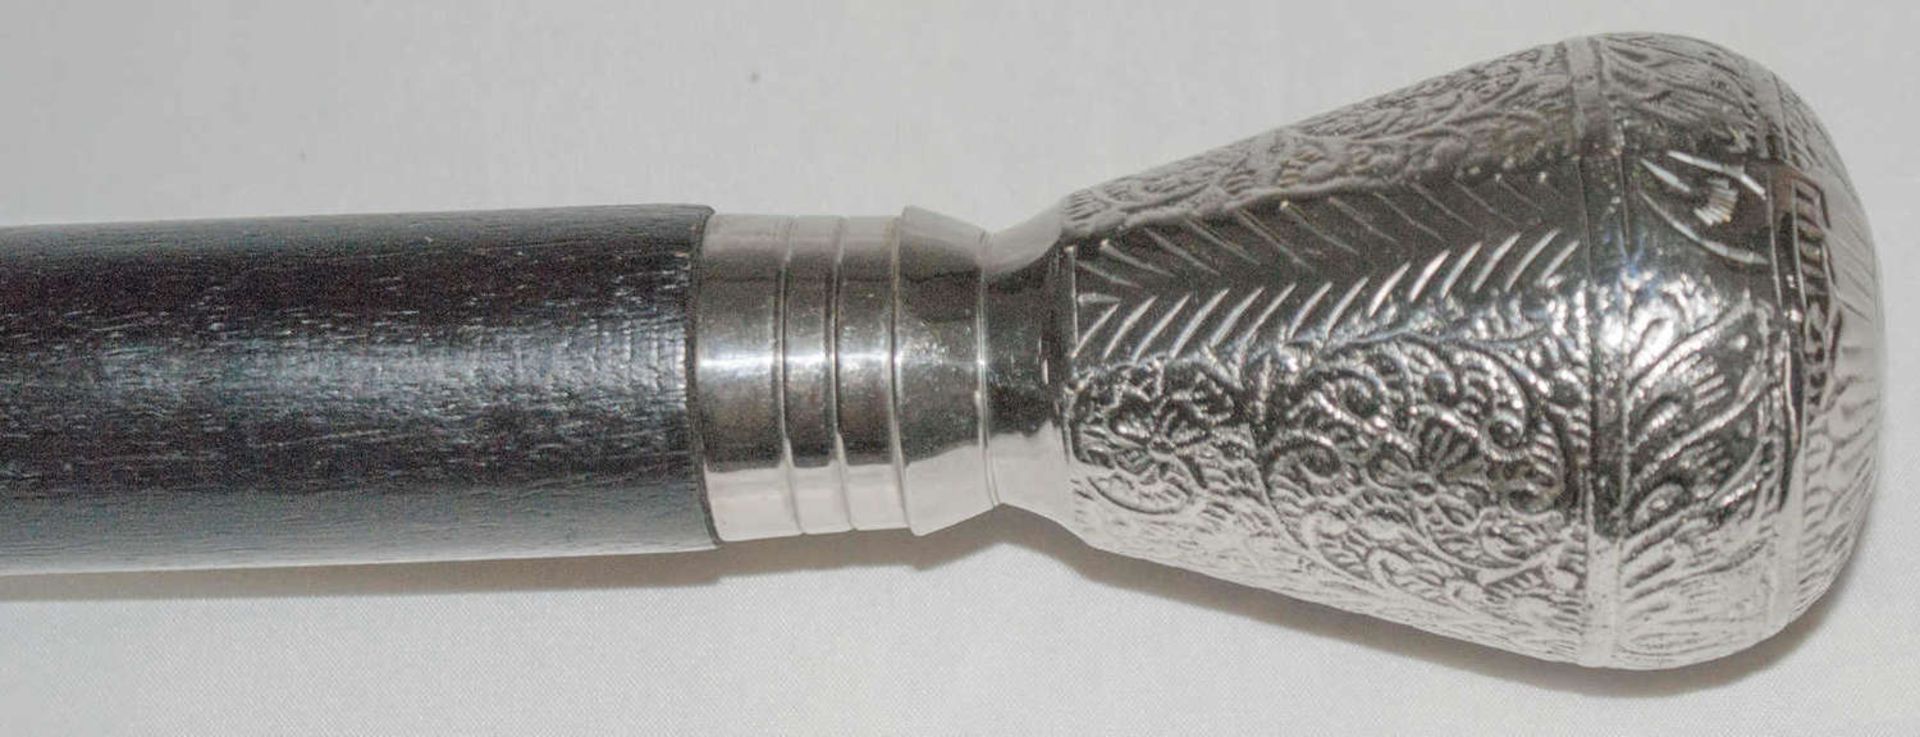 Edler Gehstock, Knauf versilbert, Höhe ca. 92,5 cmNoble walking stick, knob silvered, height about - Bild 2 aus 3